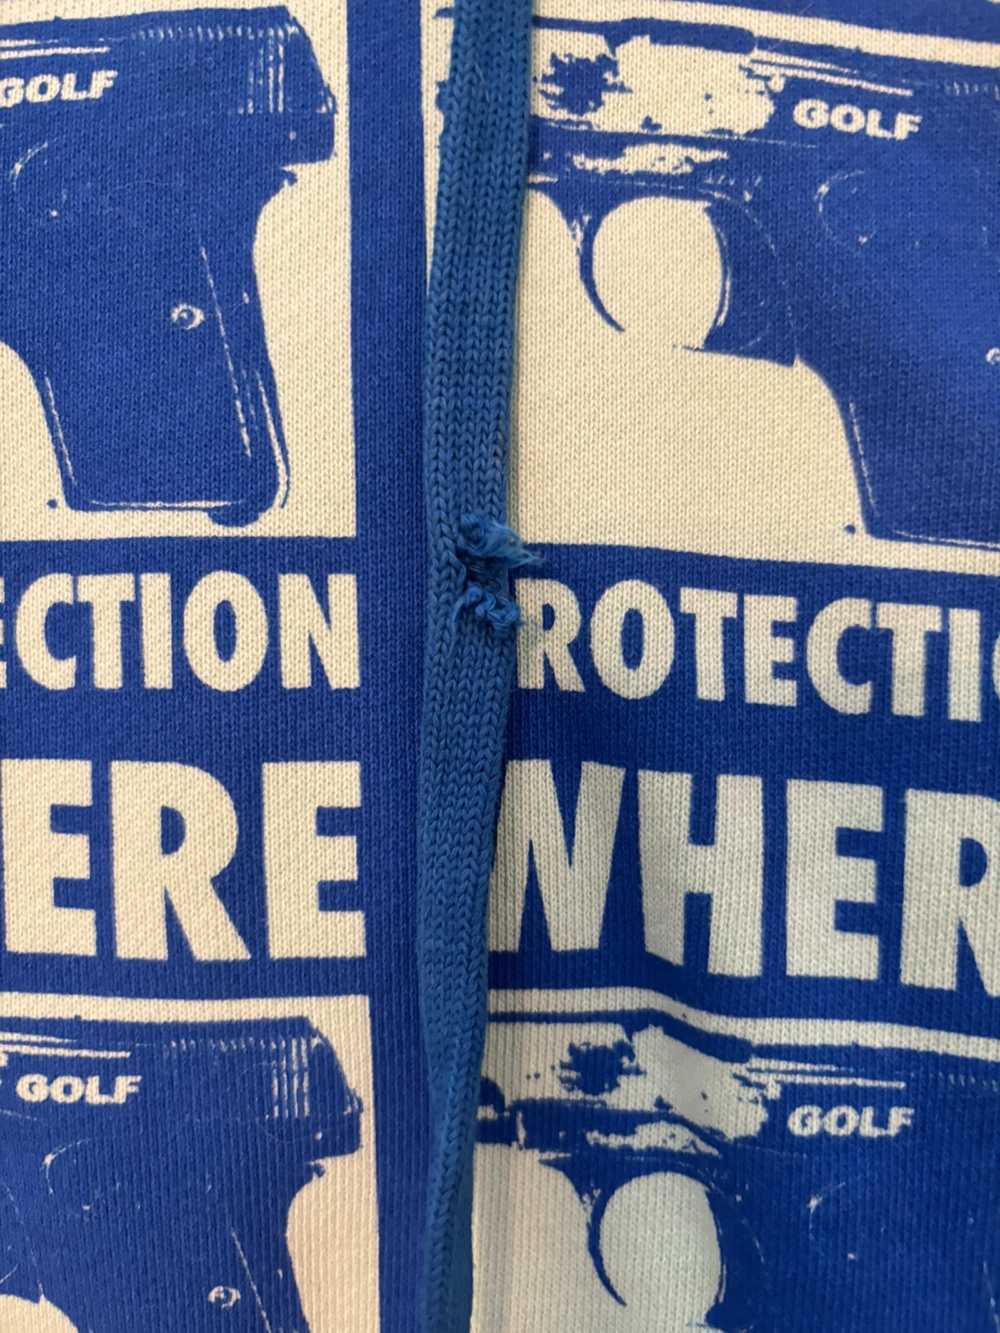 Golf Wang Where Protection Hoodie - image 3